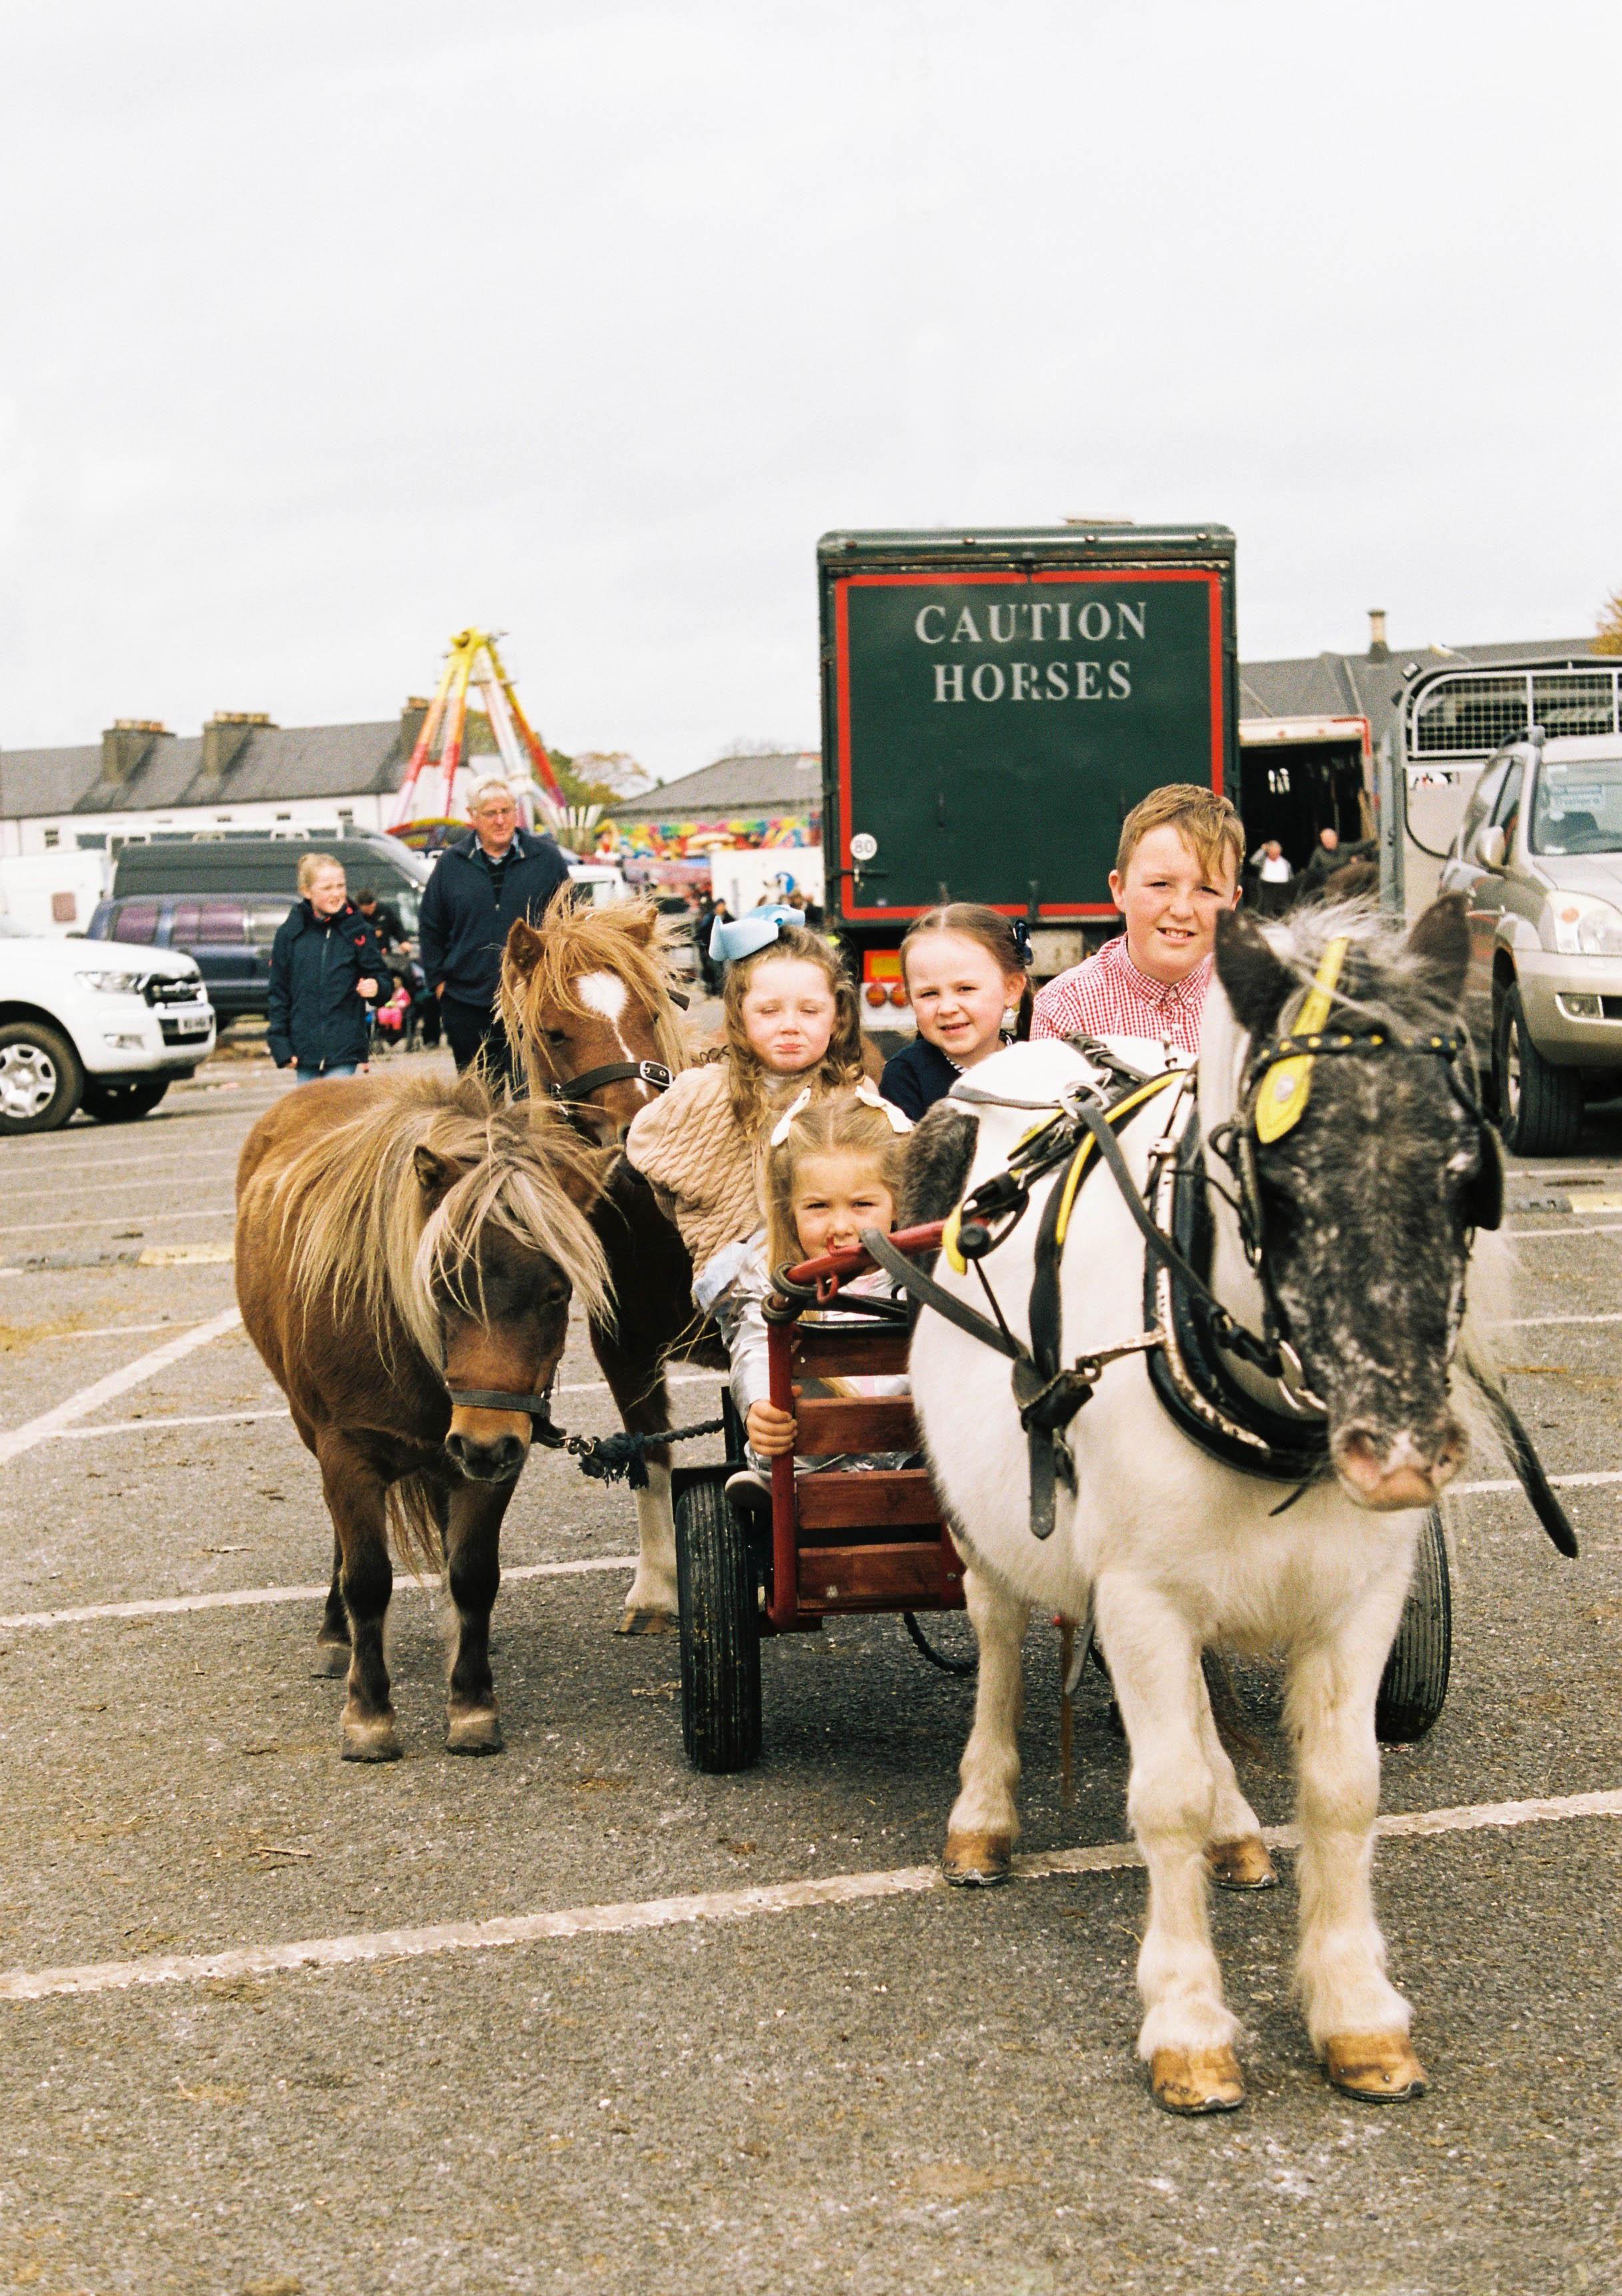 Irish Traveller Children and Horse - Ballinasloe Horse Fair, Ireland, 2018 - Print by Marion Bergin